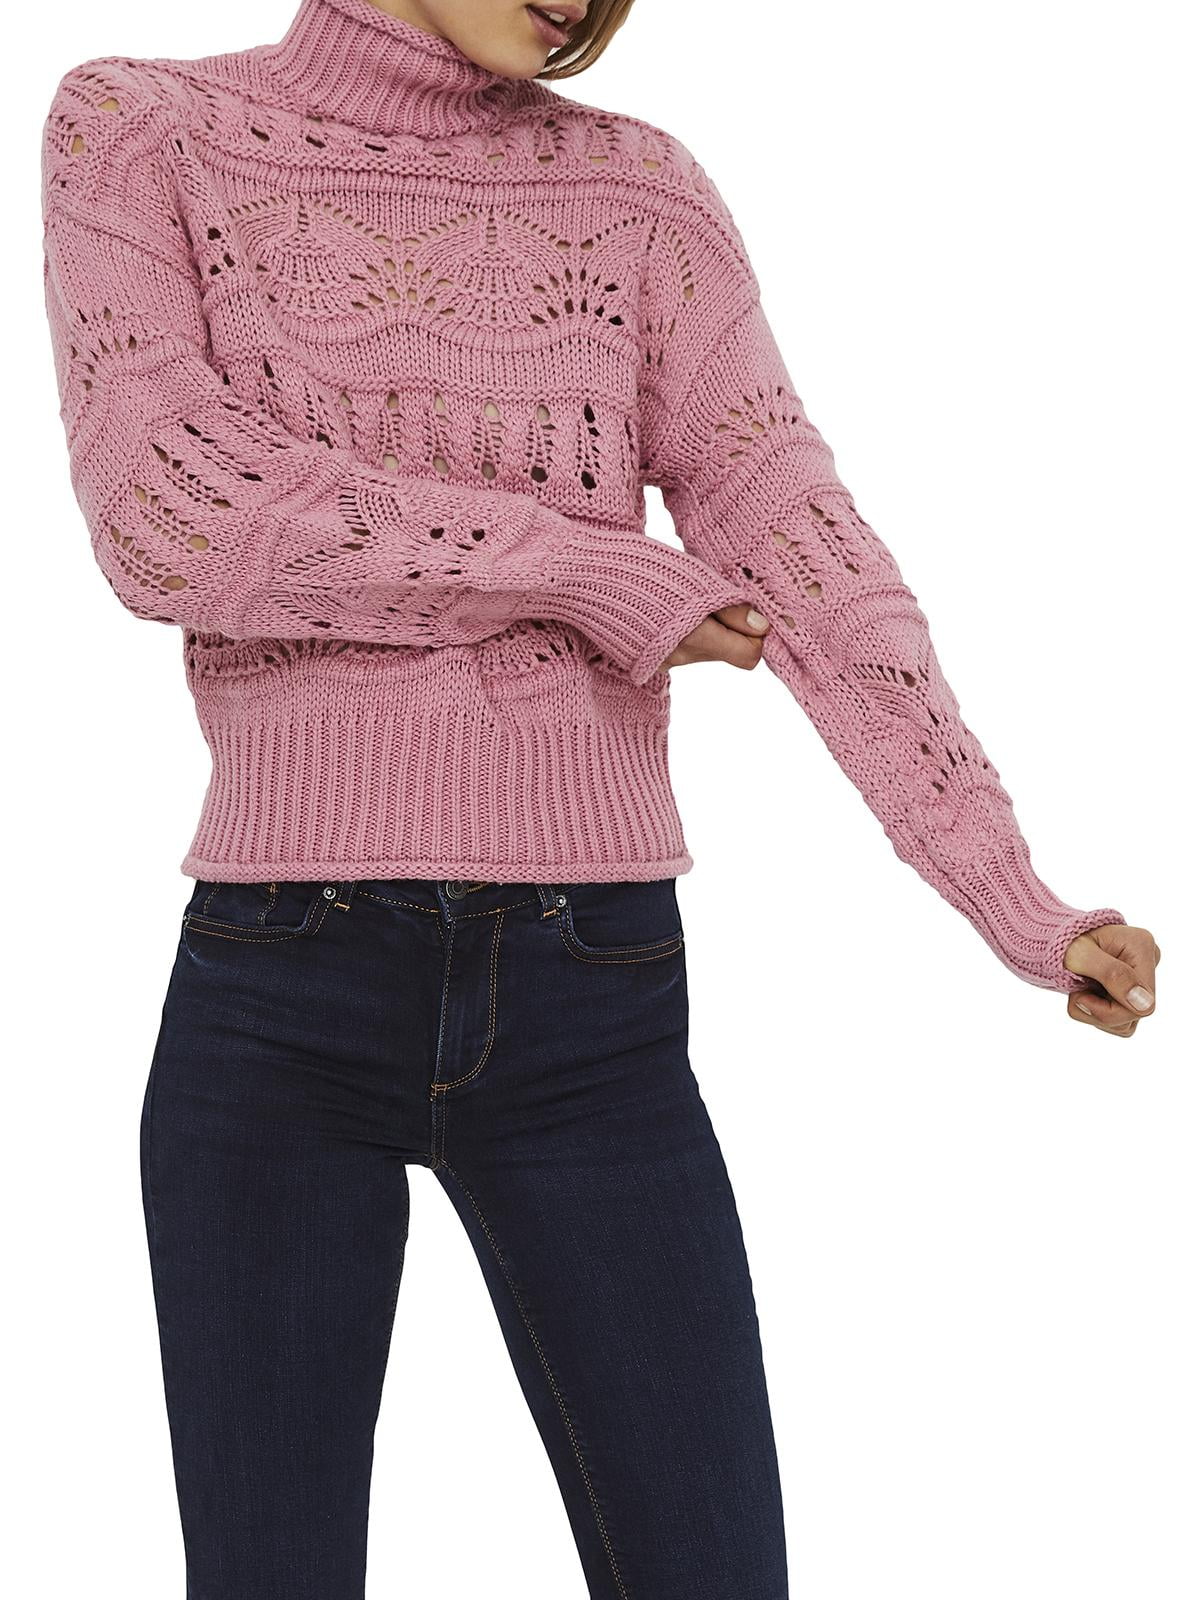 Vero Moda High Neck Open Knit Oversized Sleeve Pullover Sweater - Walmart.com